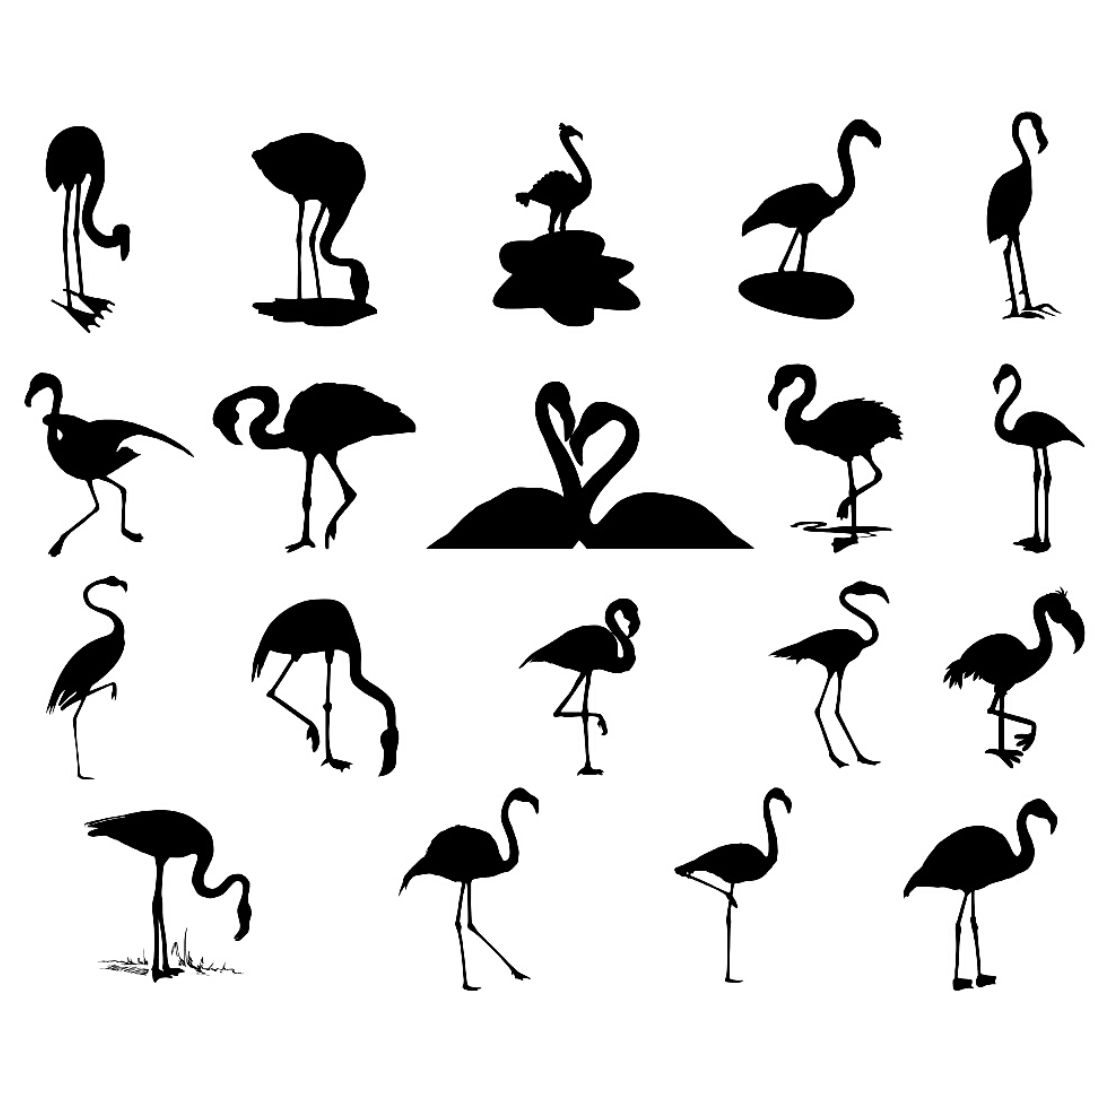 Flamingo Silhouette Bundles cover image.